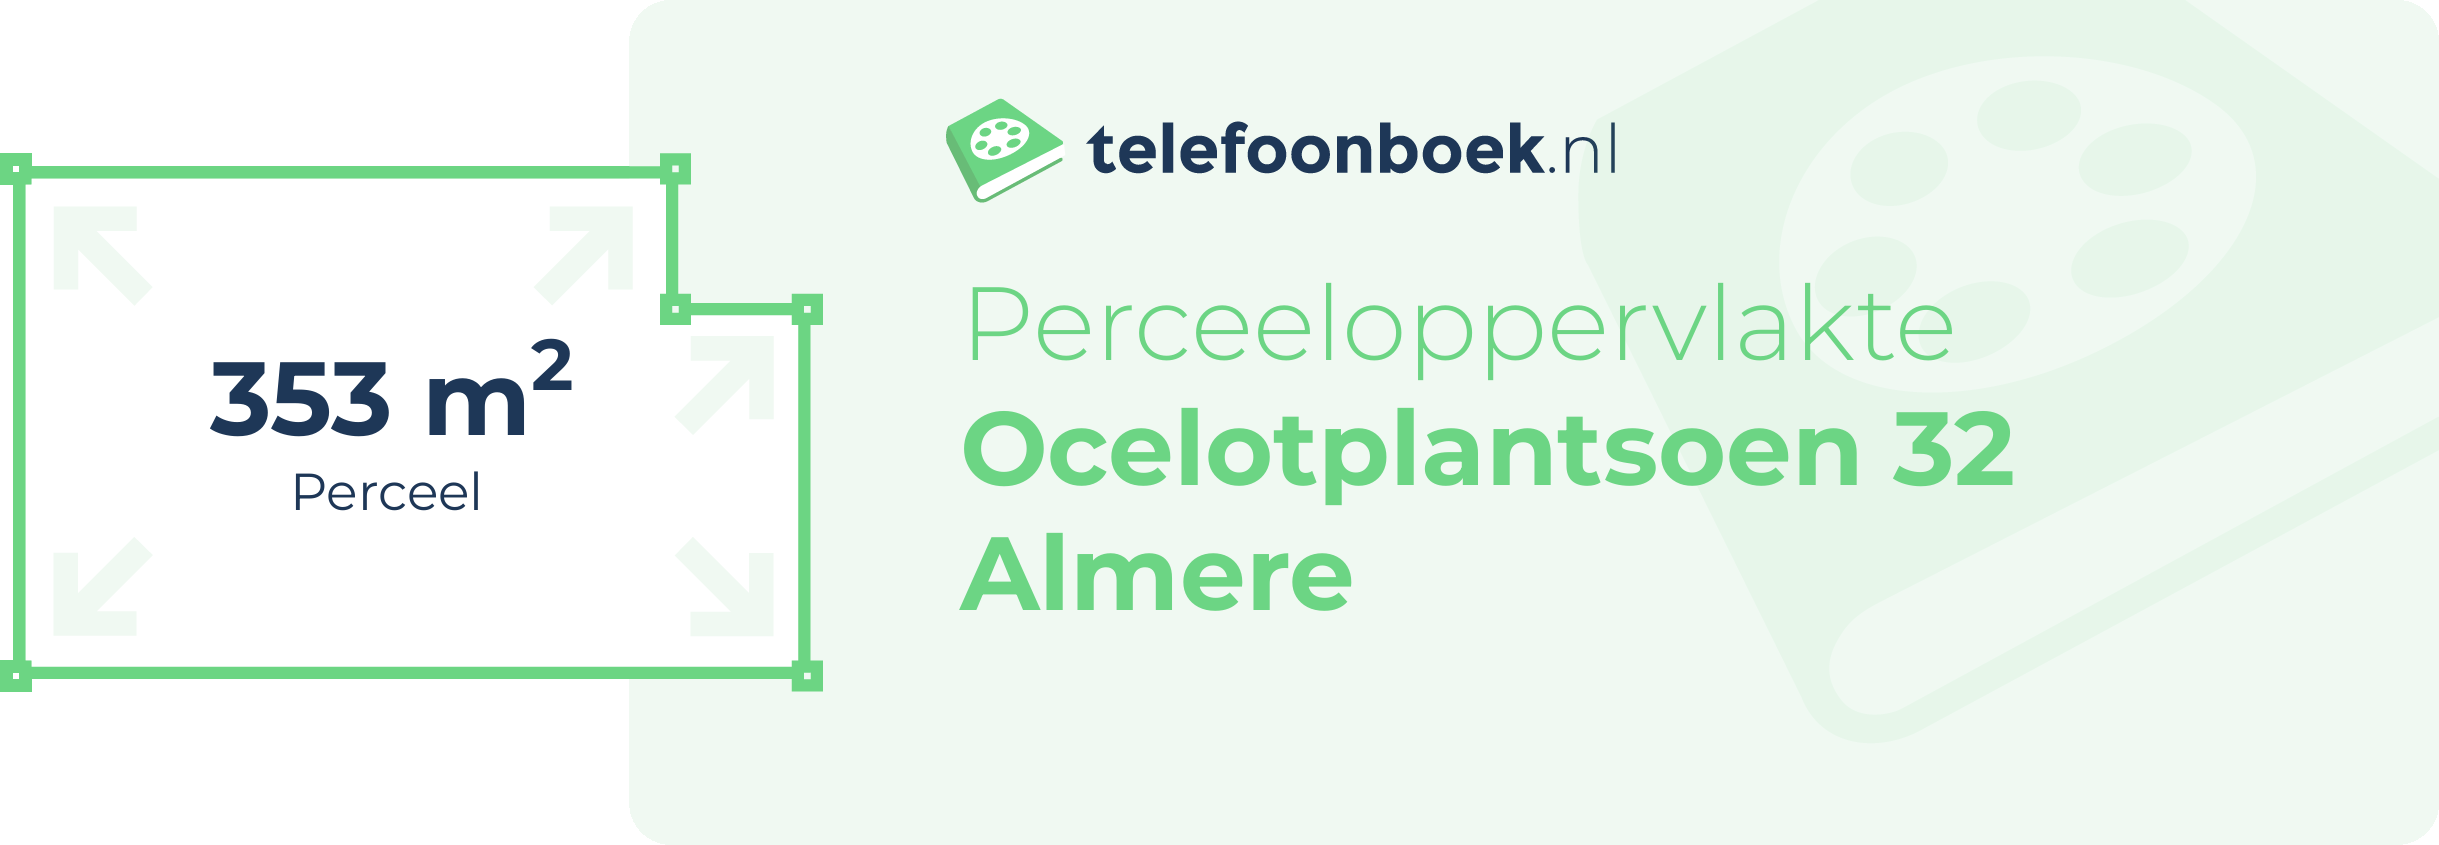 Perceeloppervlakte Ocelotplantsoen 32 Almere